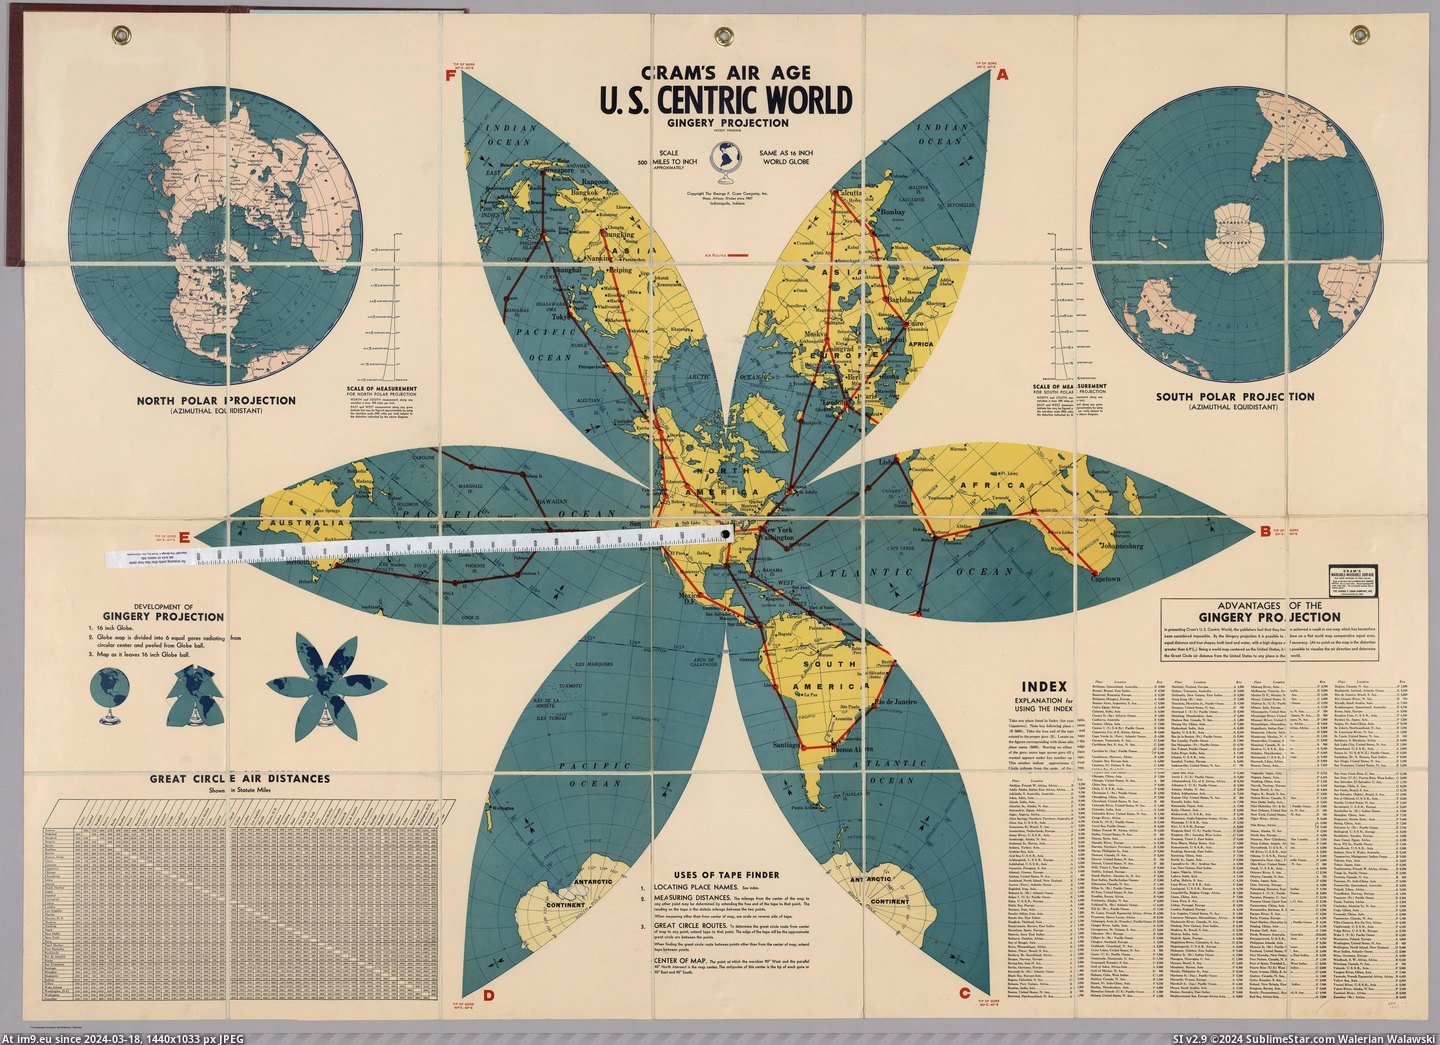 #World #Air #Age #Centric #Gingery #Projection #Est #Cram [Mapporn] The Gingery projection. 'Cram's air age. US centric world', est. 1943 [5907x4248] Pic. (Bild von album My r/MAPS favs))